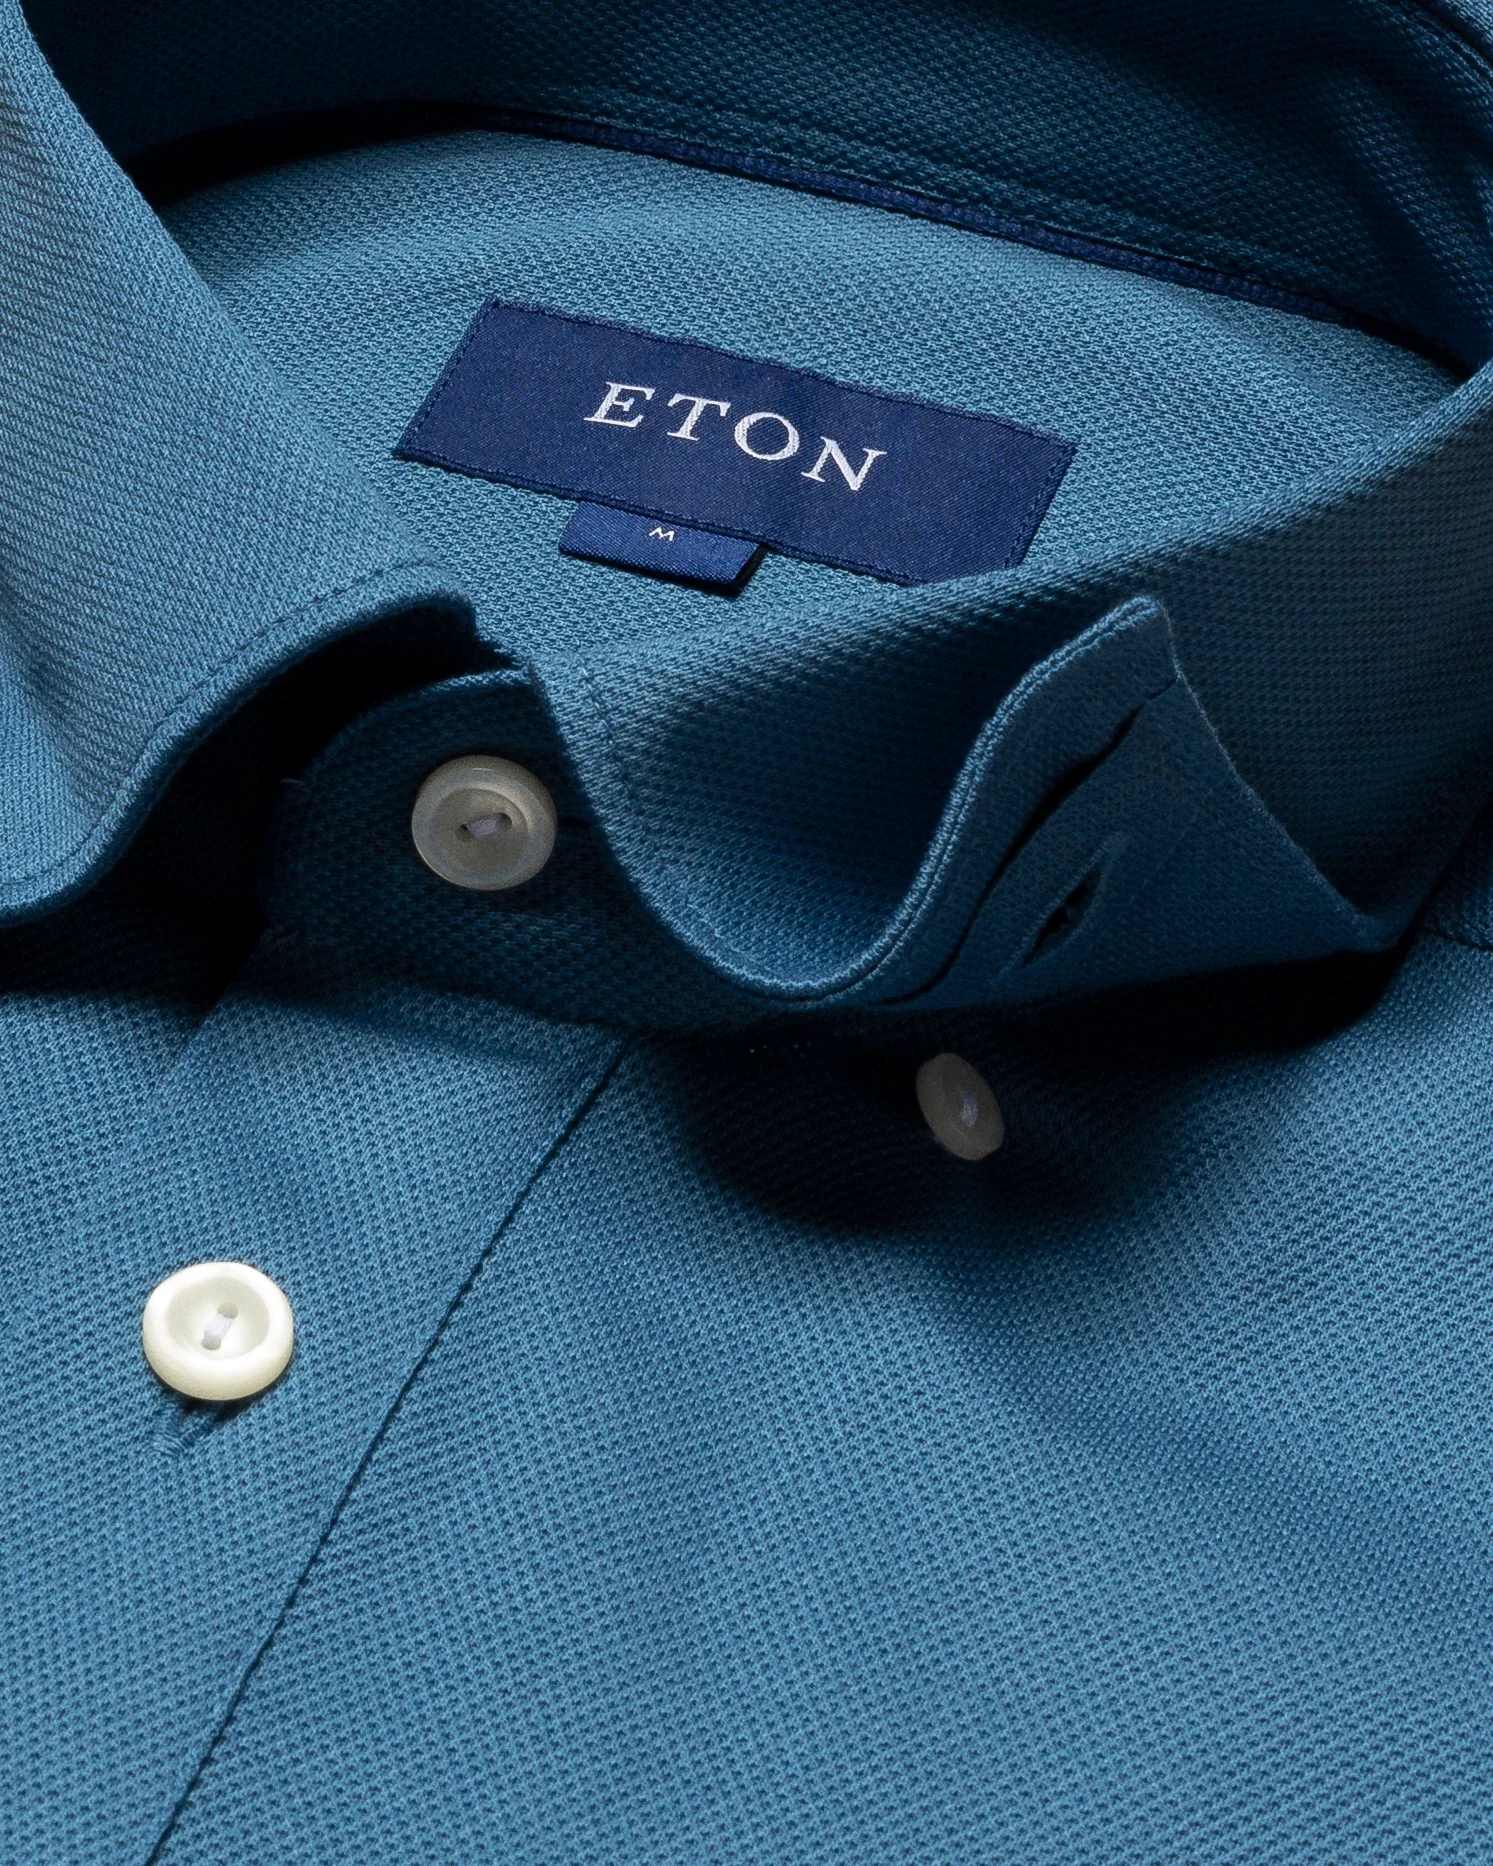 Eton - mid blue polo shirt long sleeved